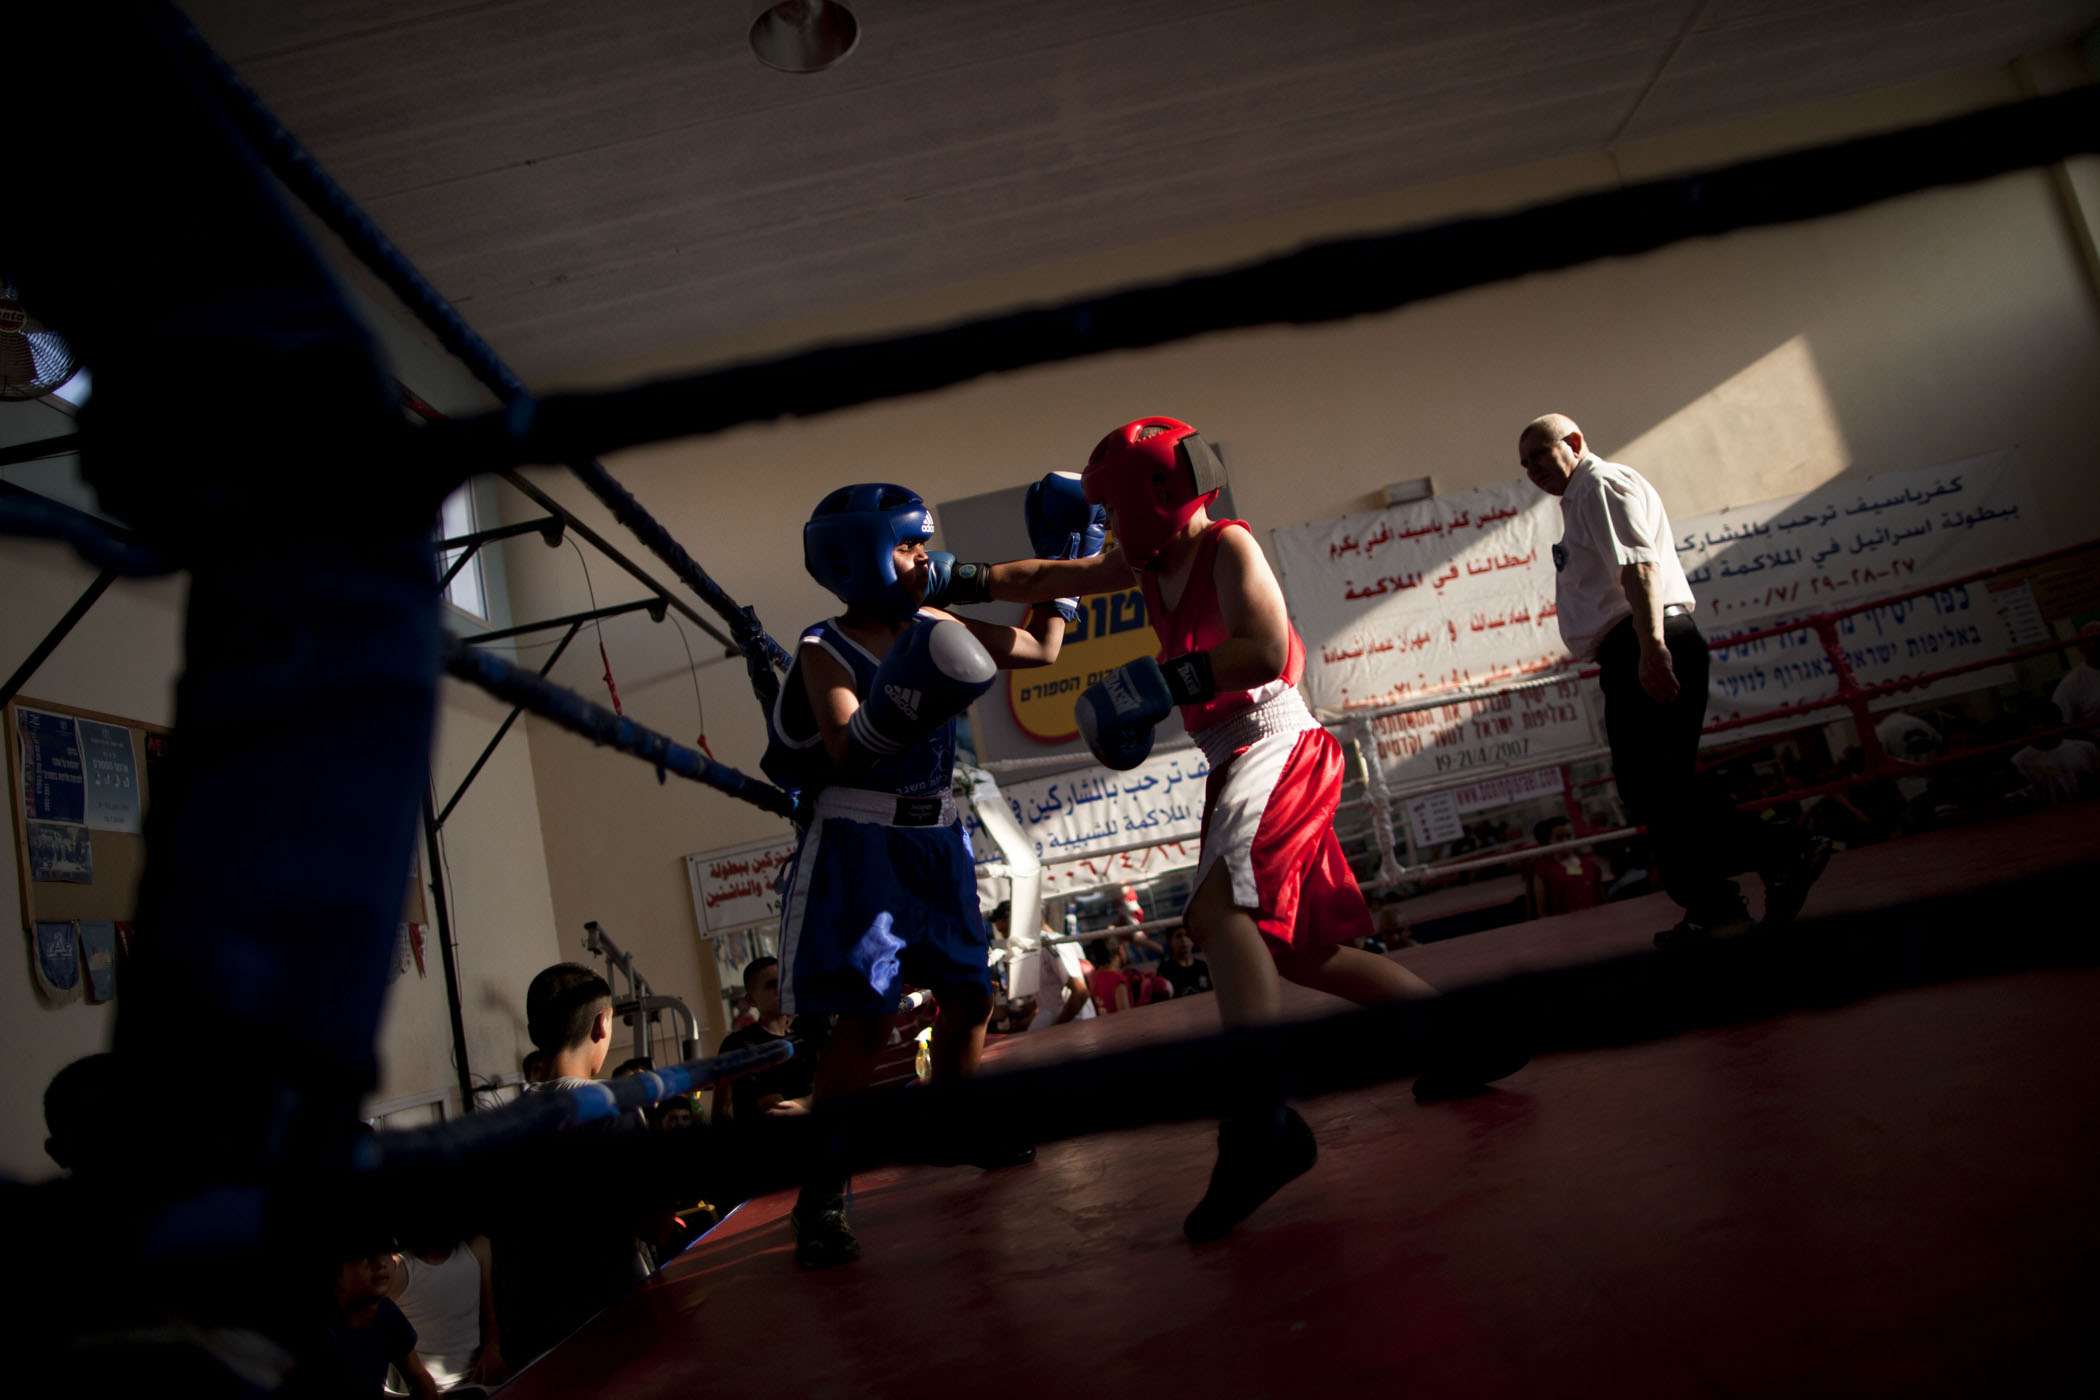 Israeli and Israeli Arab boys fight during Israel's National Youth Boxing Championship in the Arab village of Kfar Yasif, northern Israel.